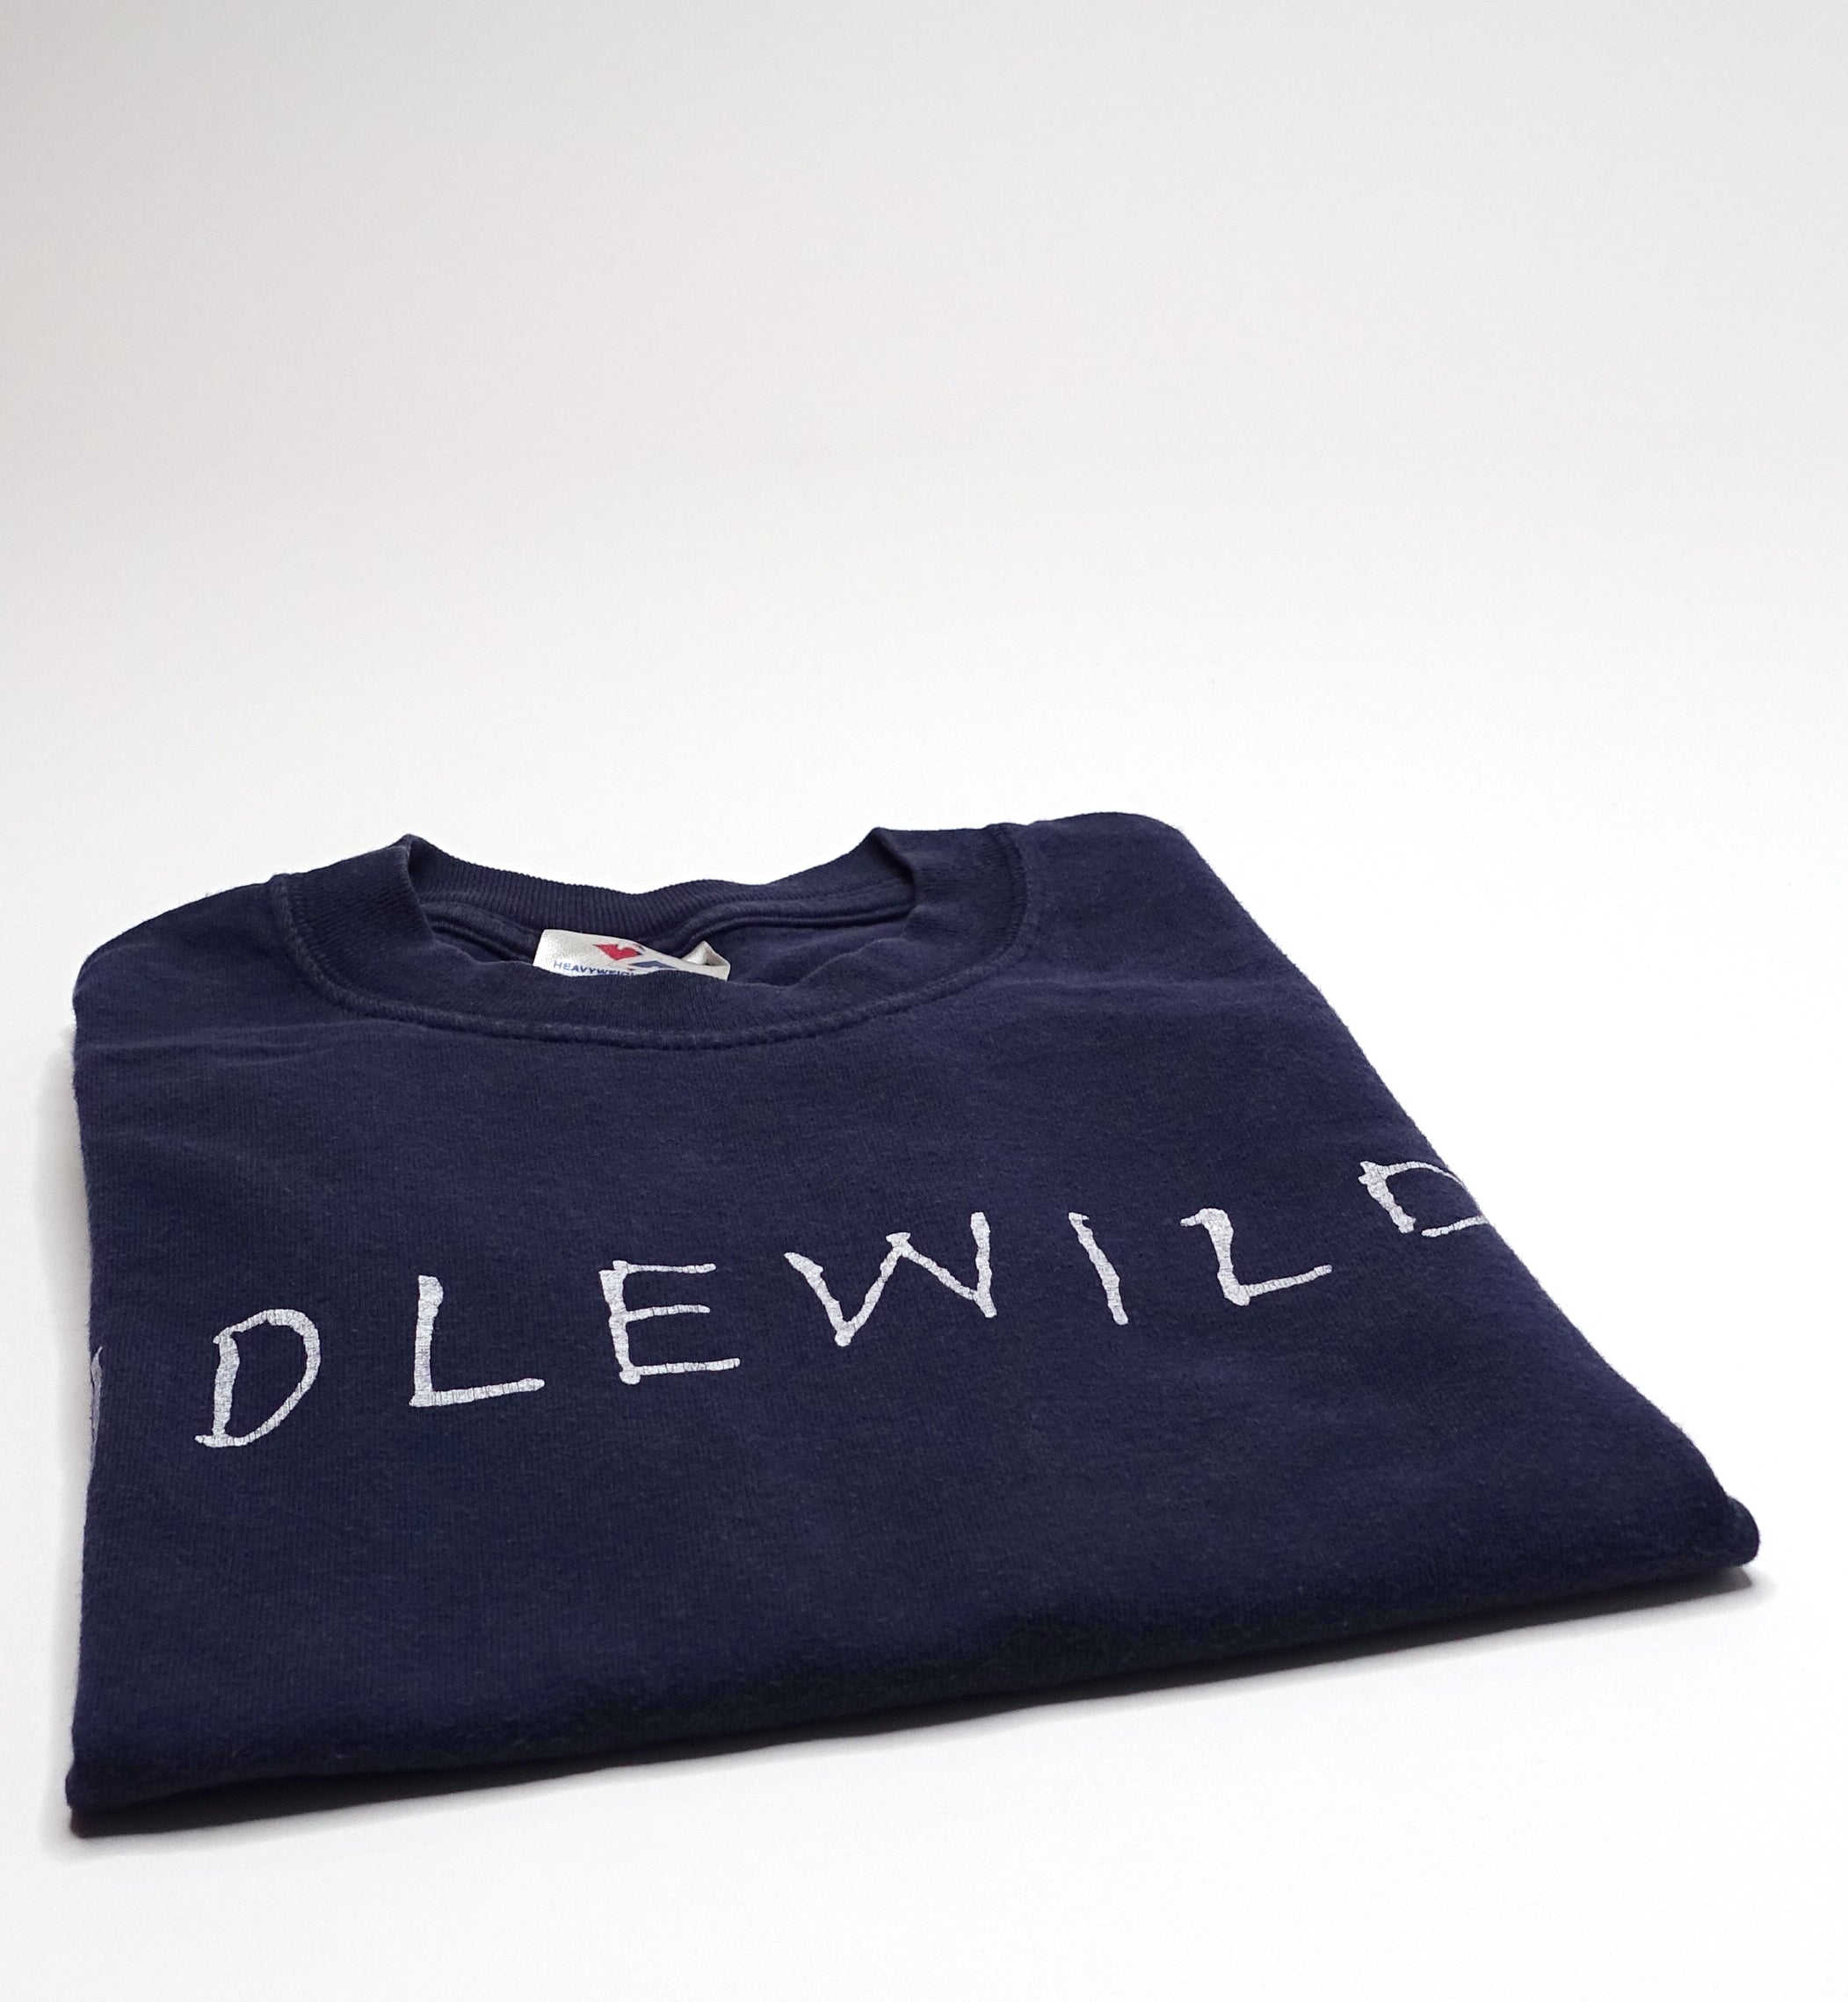 Idlewild - the Remote Part / Logo 2002 Tour Shirt Size Medium